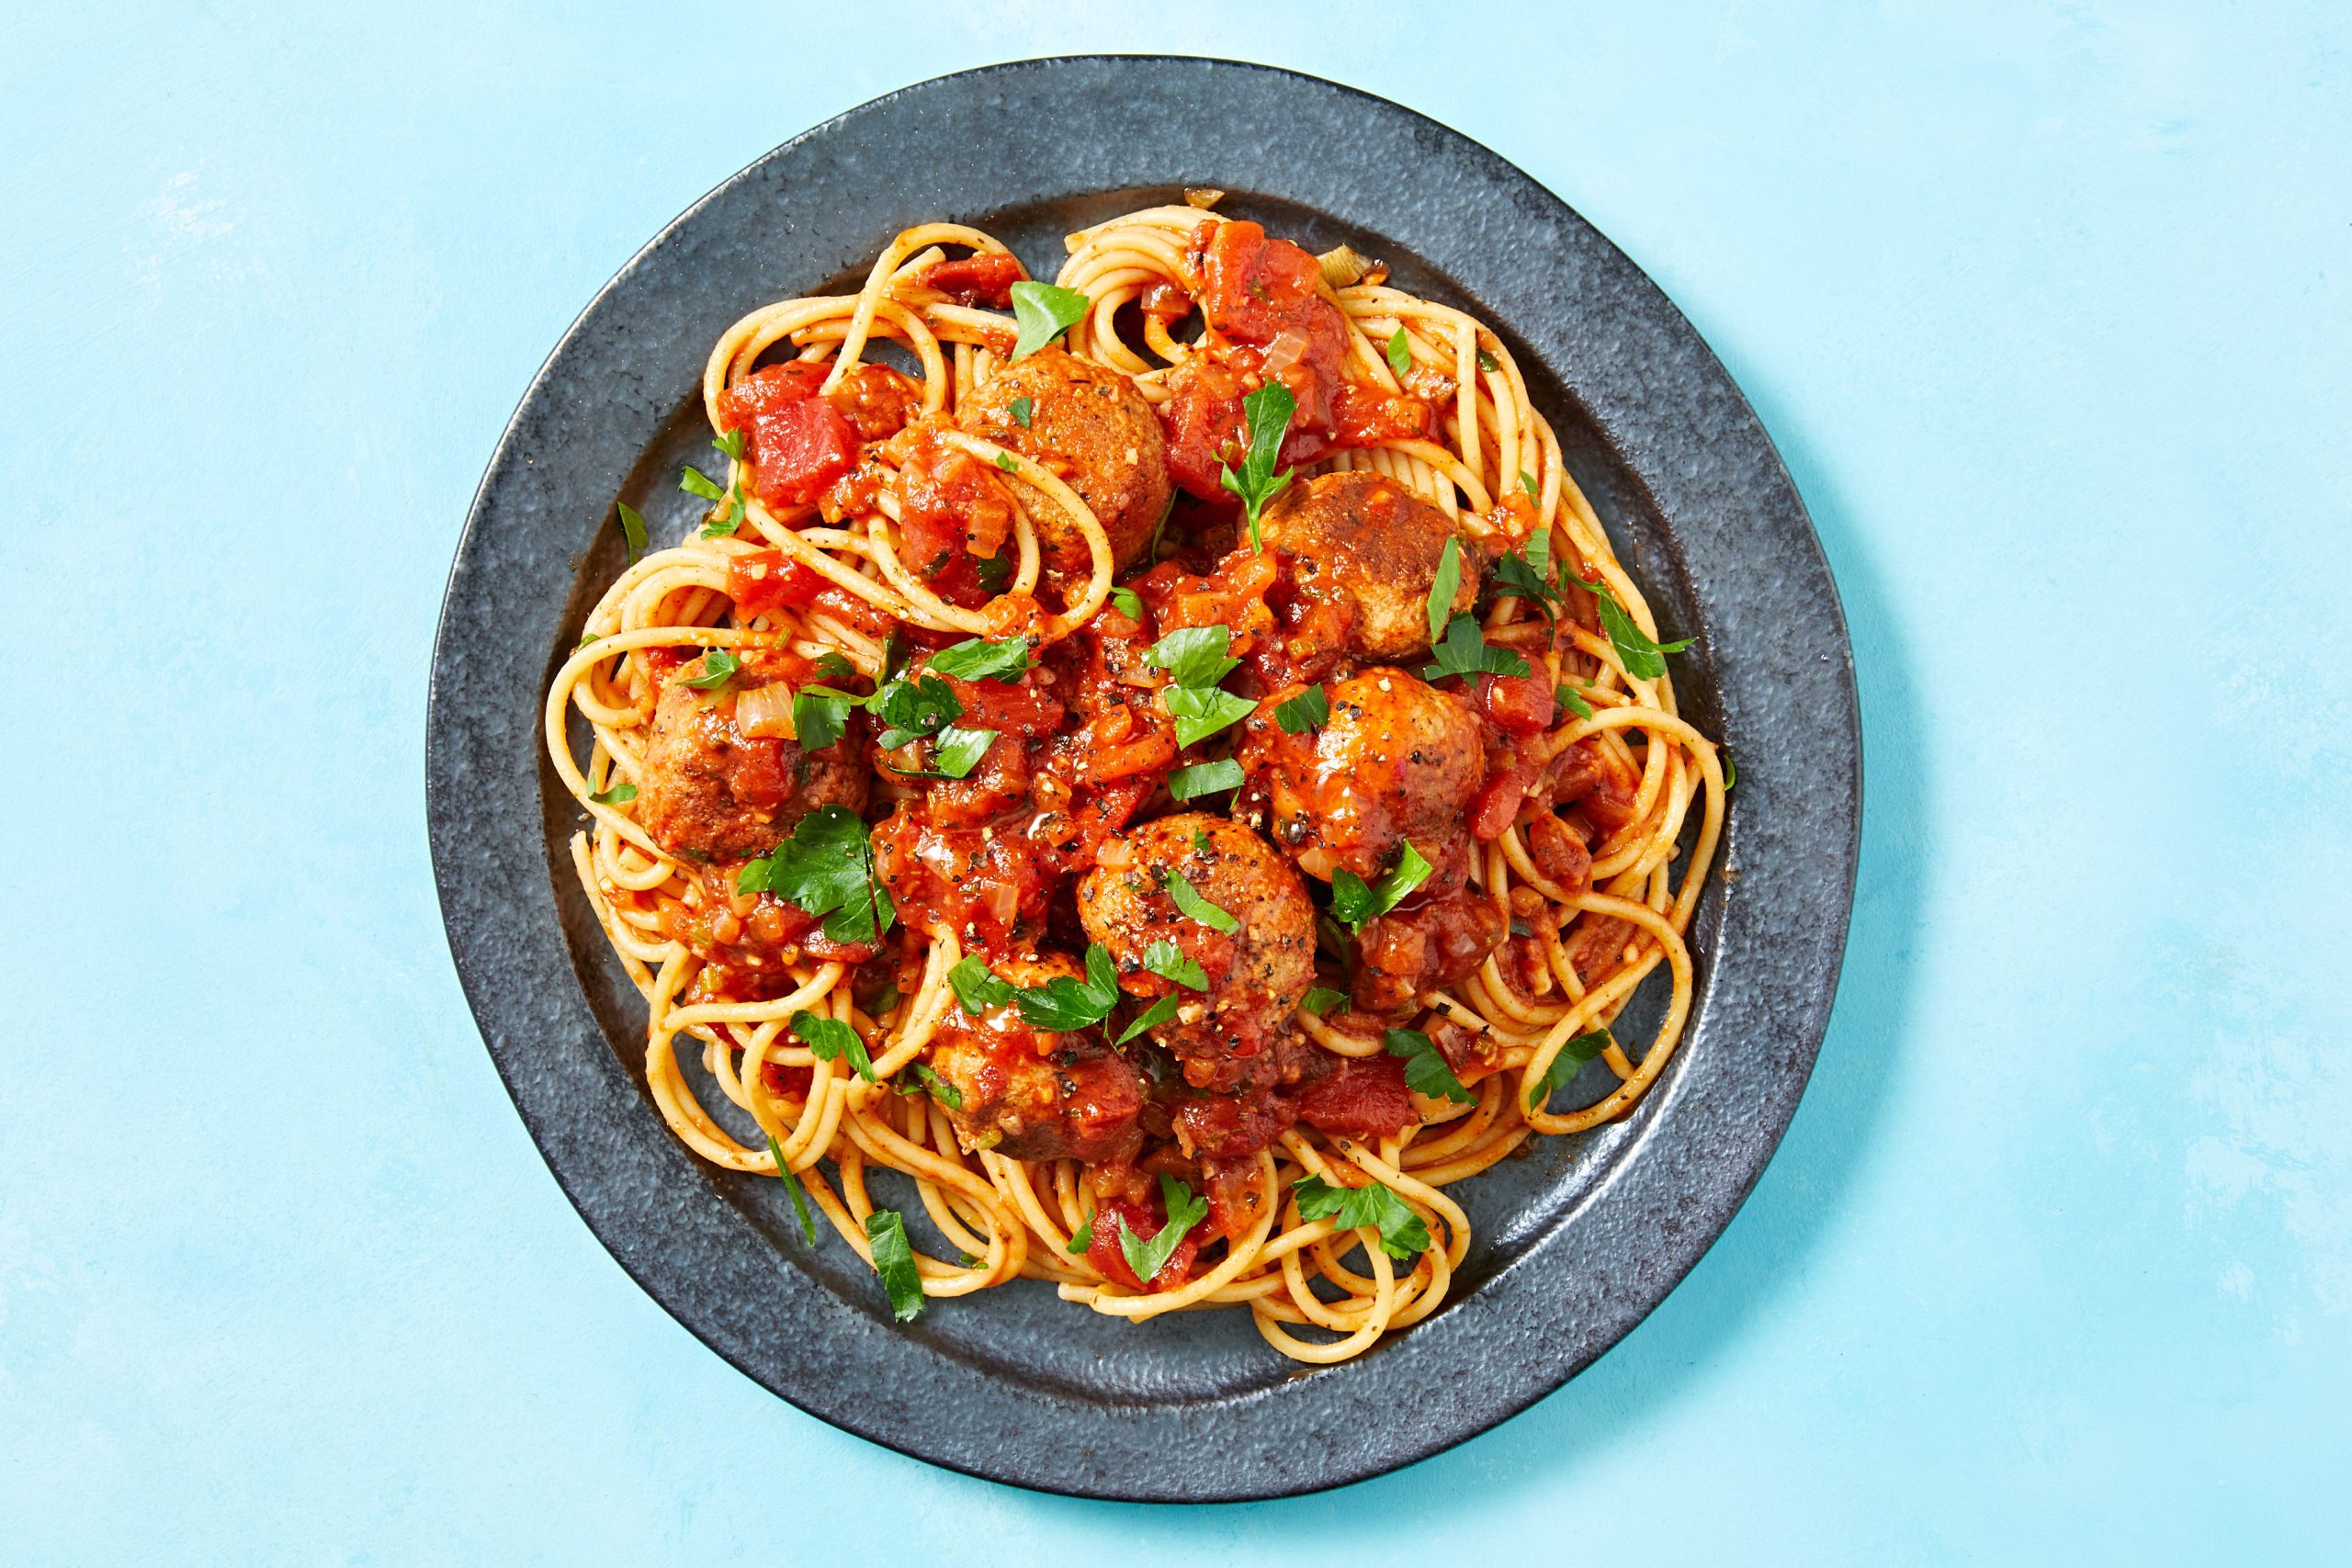 v2 Plant-Based Meatballs and Spaghetti